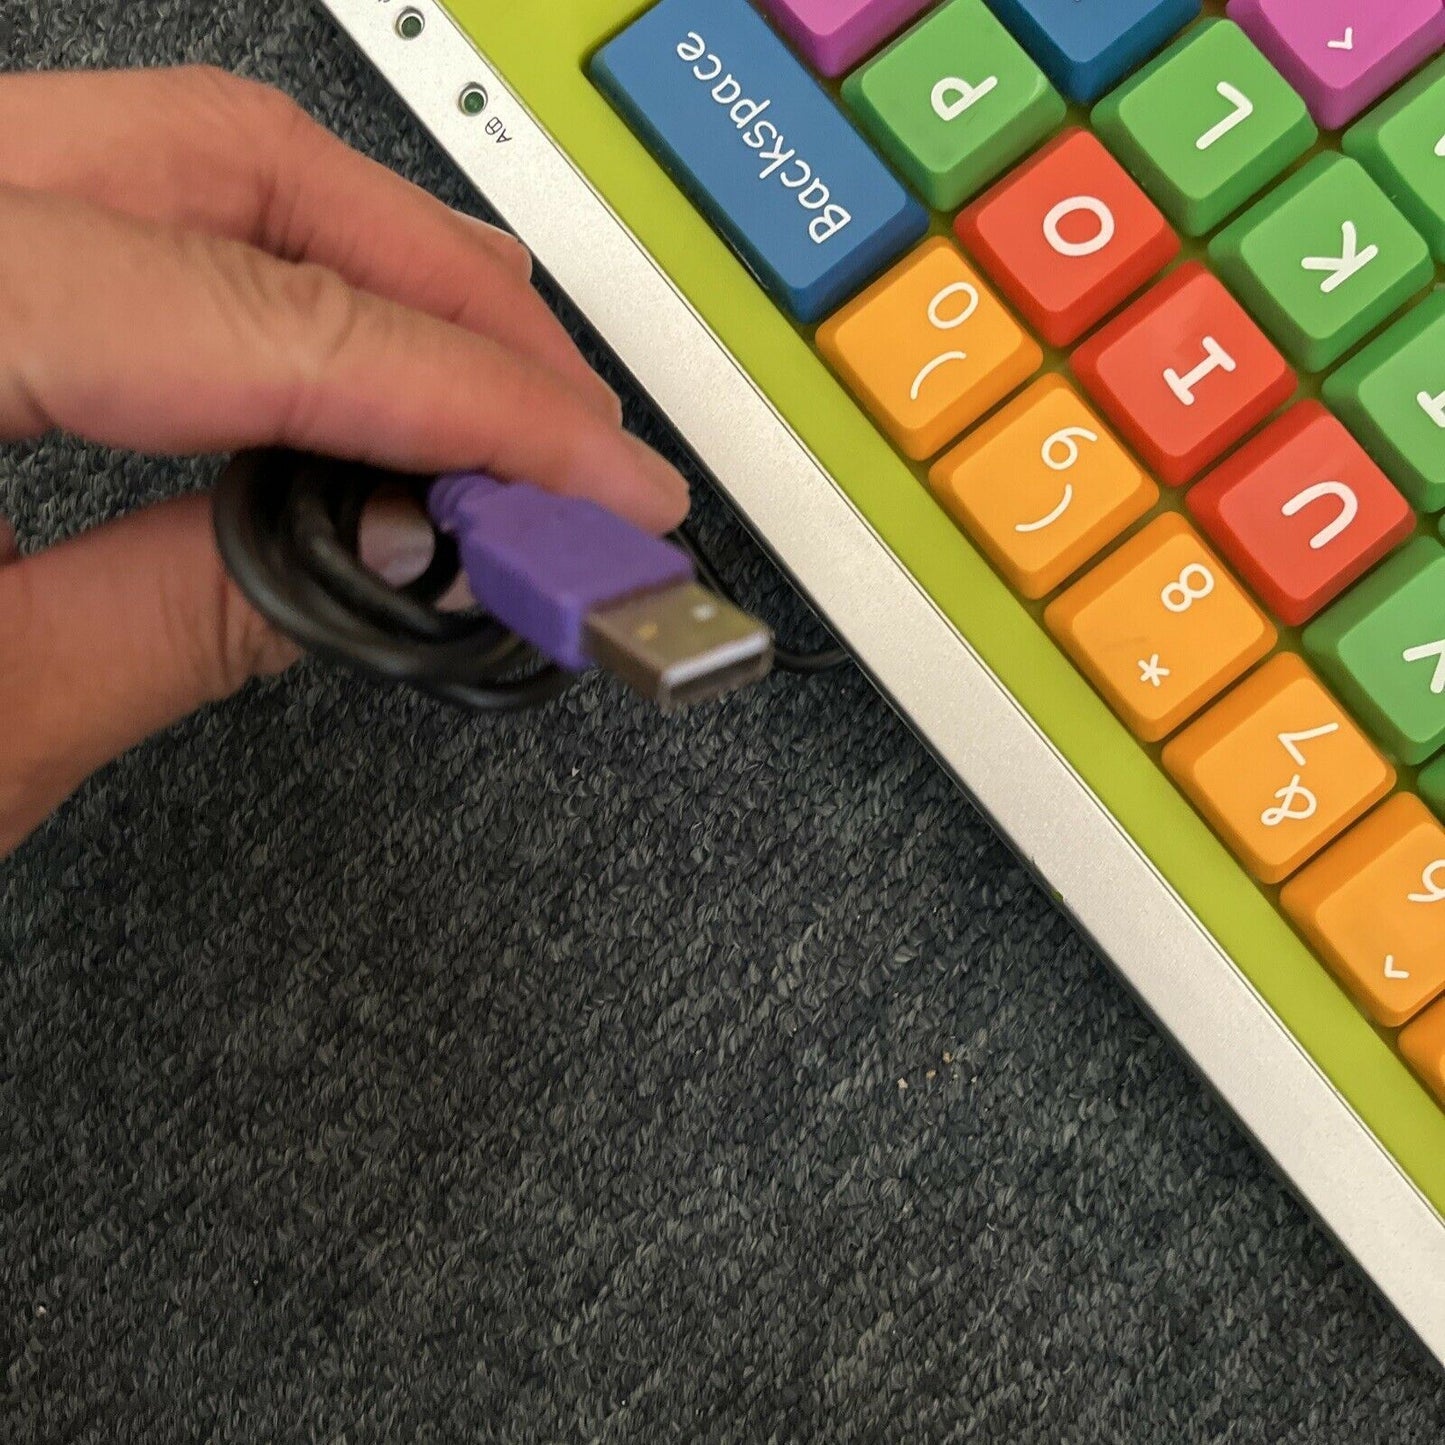 Crayola Big Button Keyboard Easy Type USB Model 12071